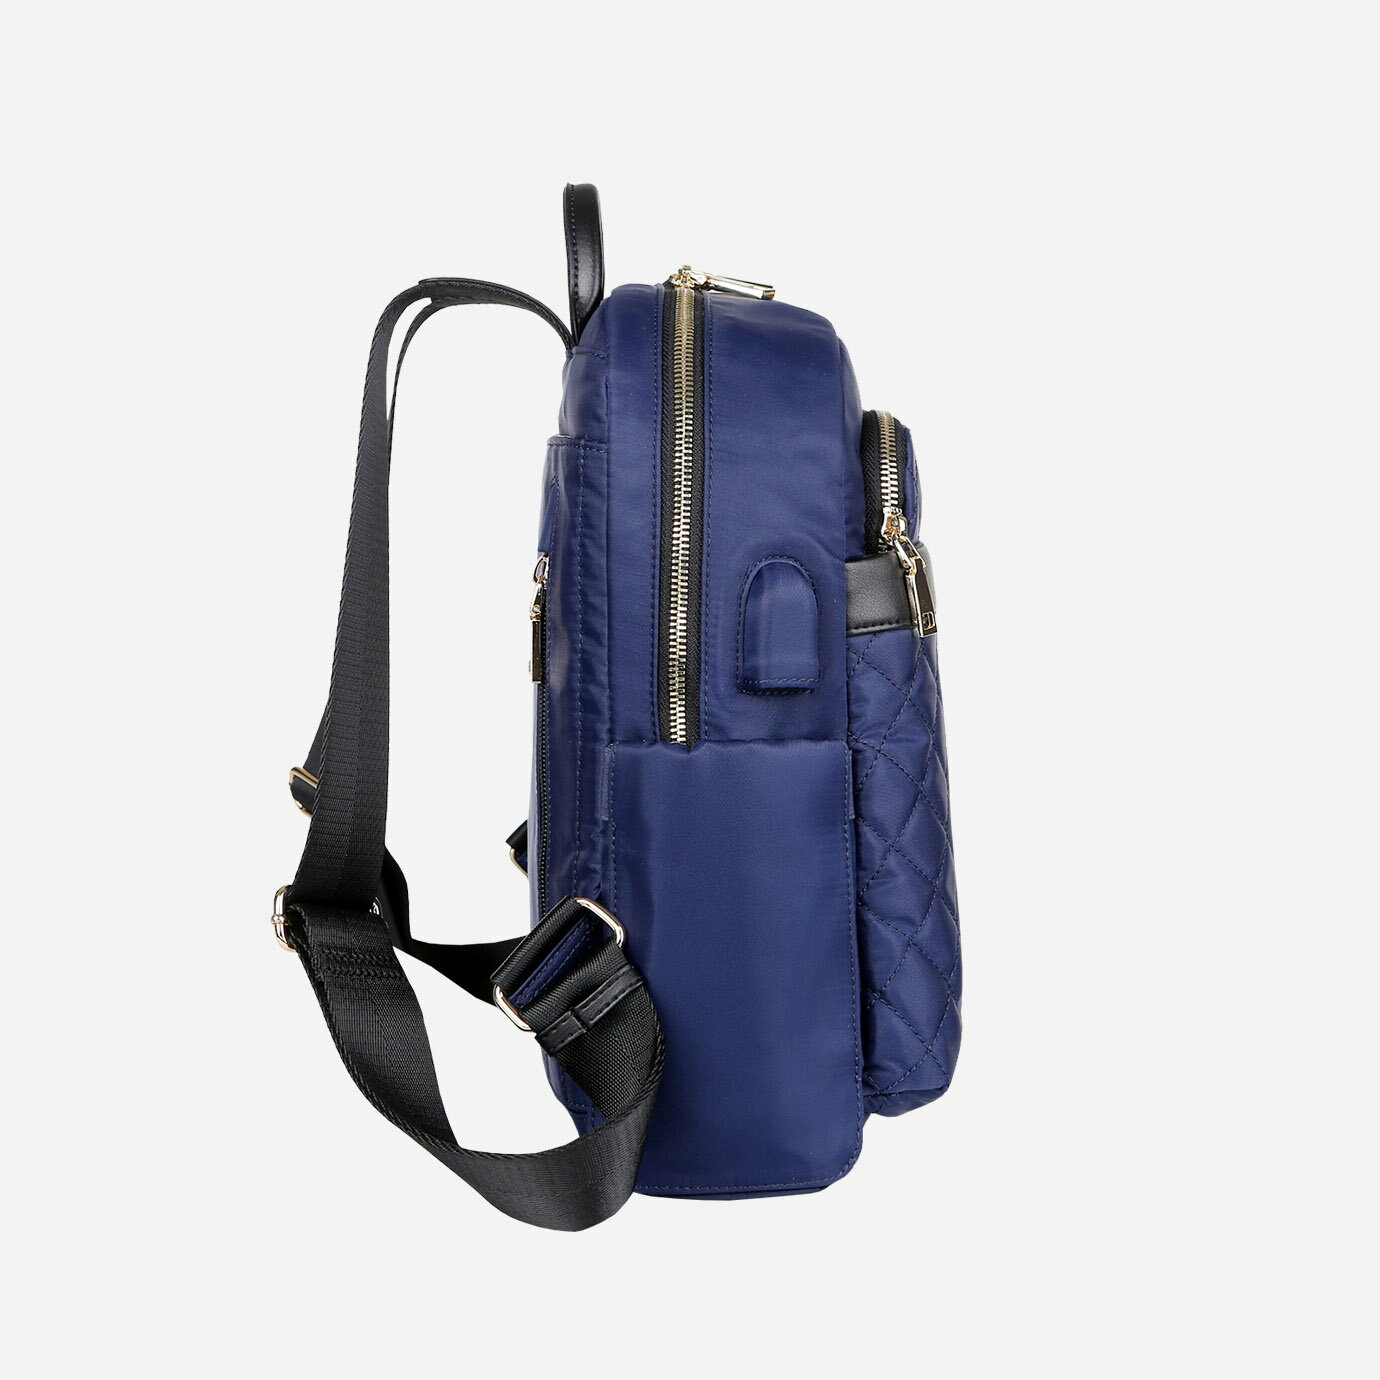 Nordace Ellie Mini- 後背包 充電雙肩包 雙肩包 筆電包 電腦包 旅行包 休閒包 防水背包 7色可選-藍色 5